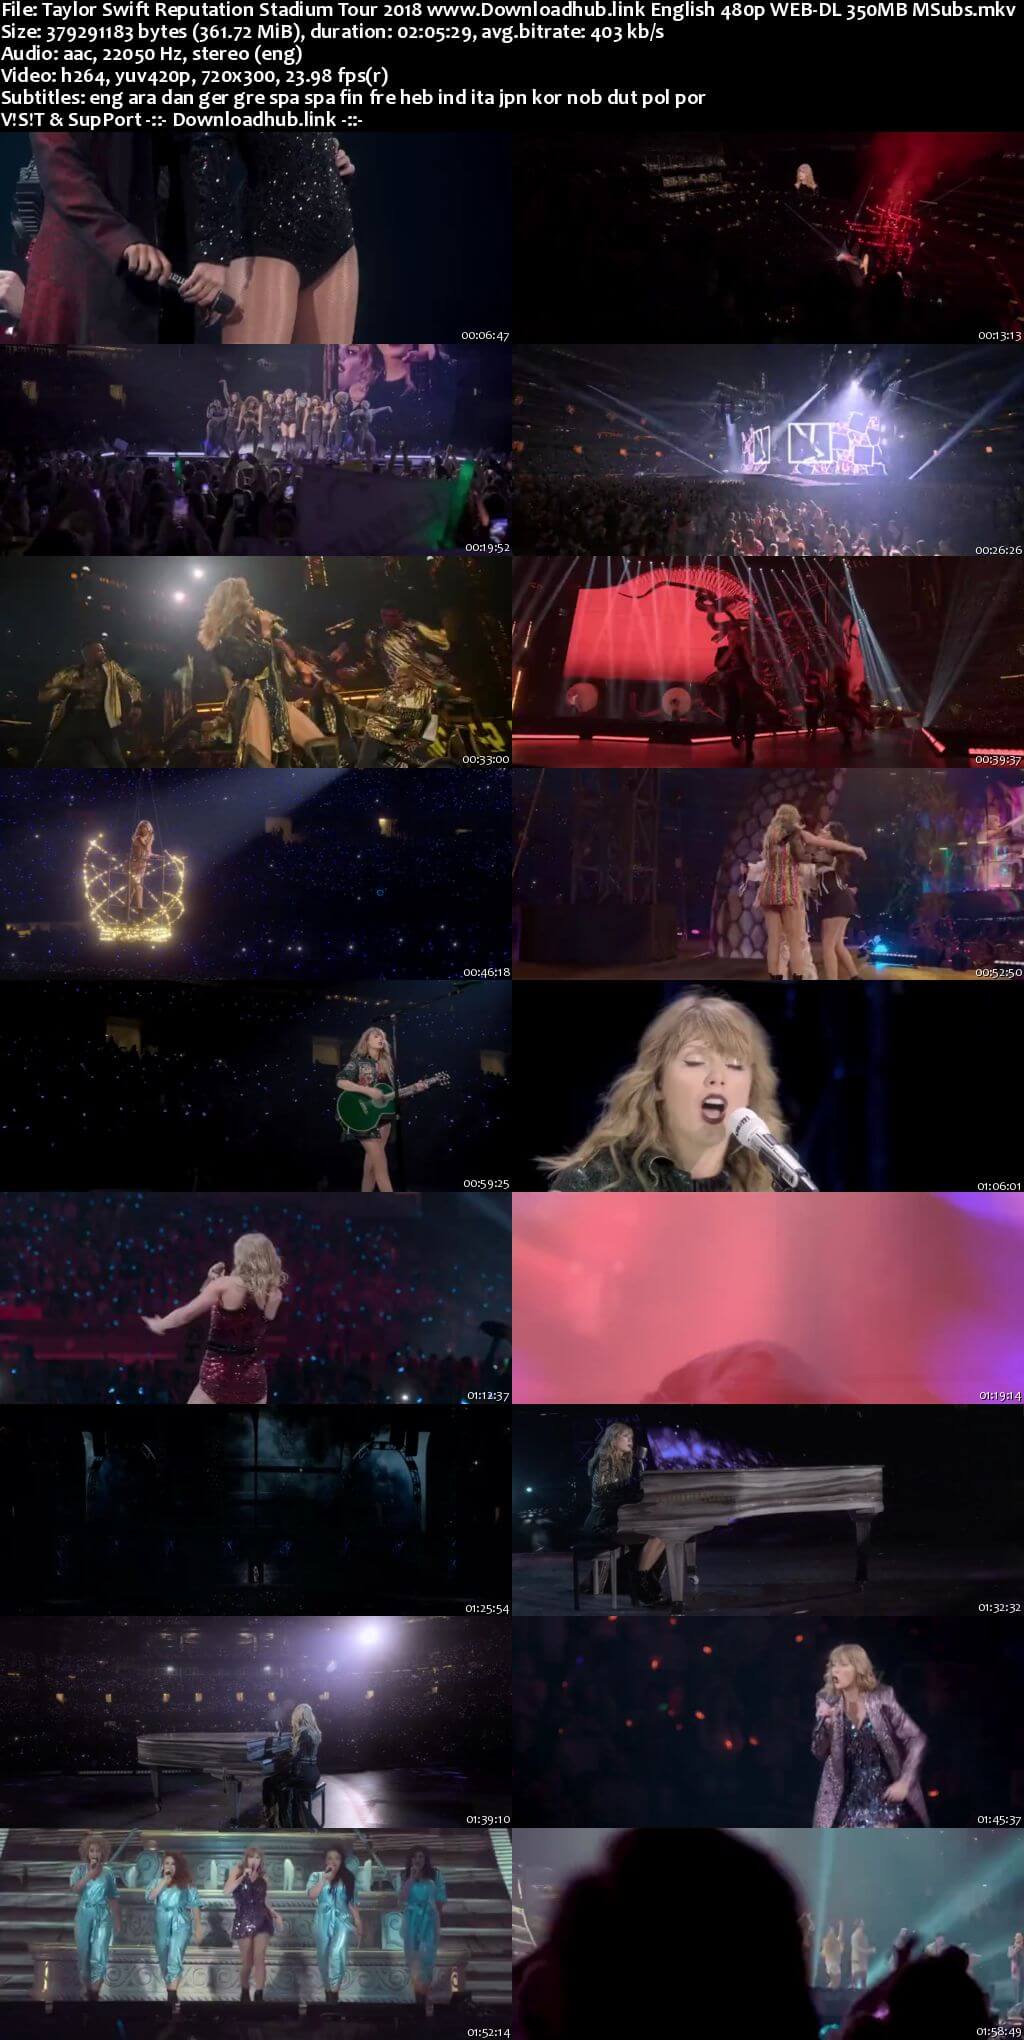 Taylor Swift Reputation Stadium Tour 2018 English 350MB NF Web-DL 480p MSubs